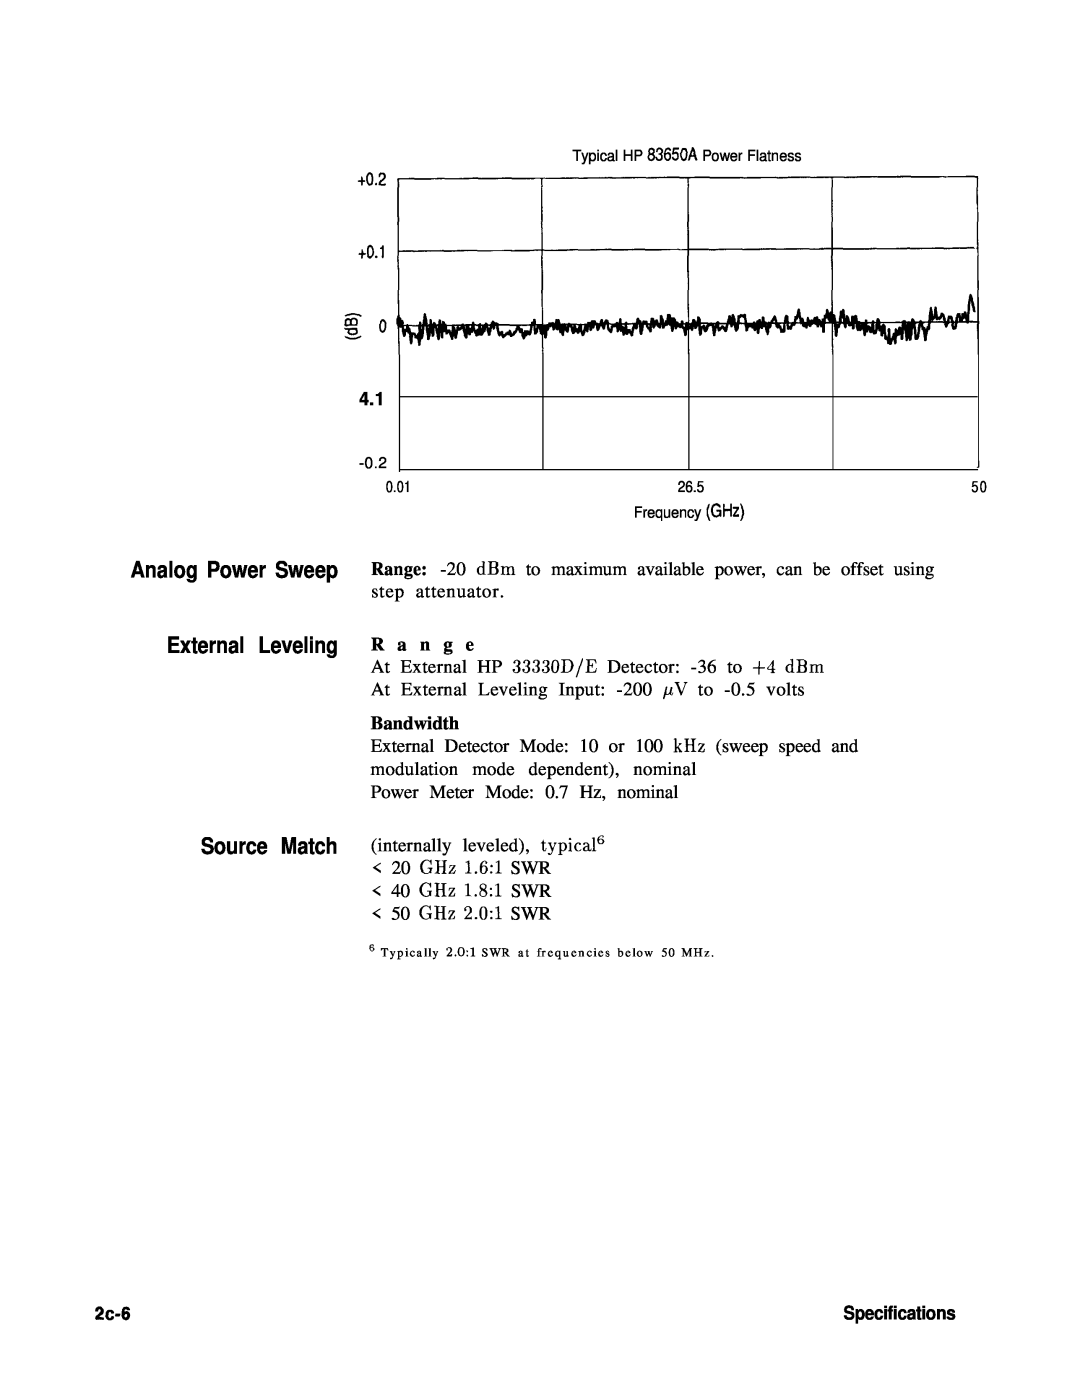 HP 24A, 83620A, 22A manual Analog Power Sweep External Leveling Source Match, R a n g e, Bandwidth, 2c-6 